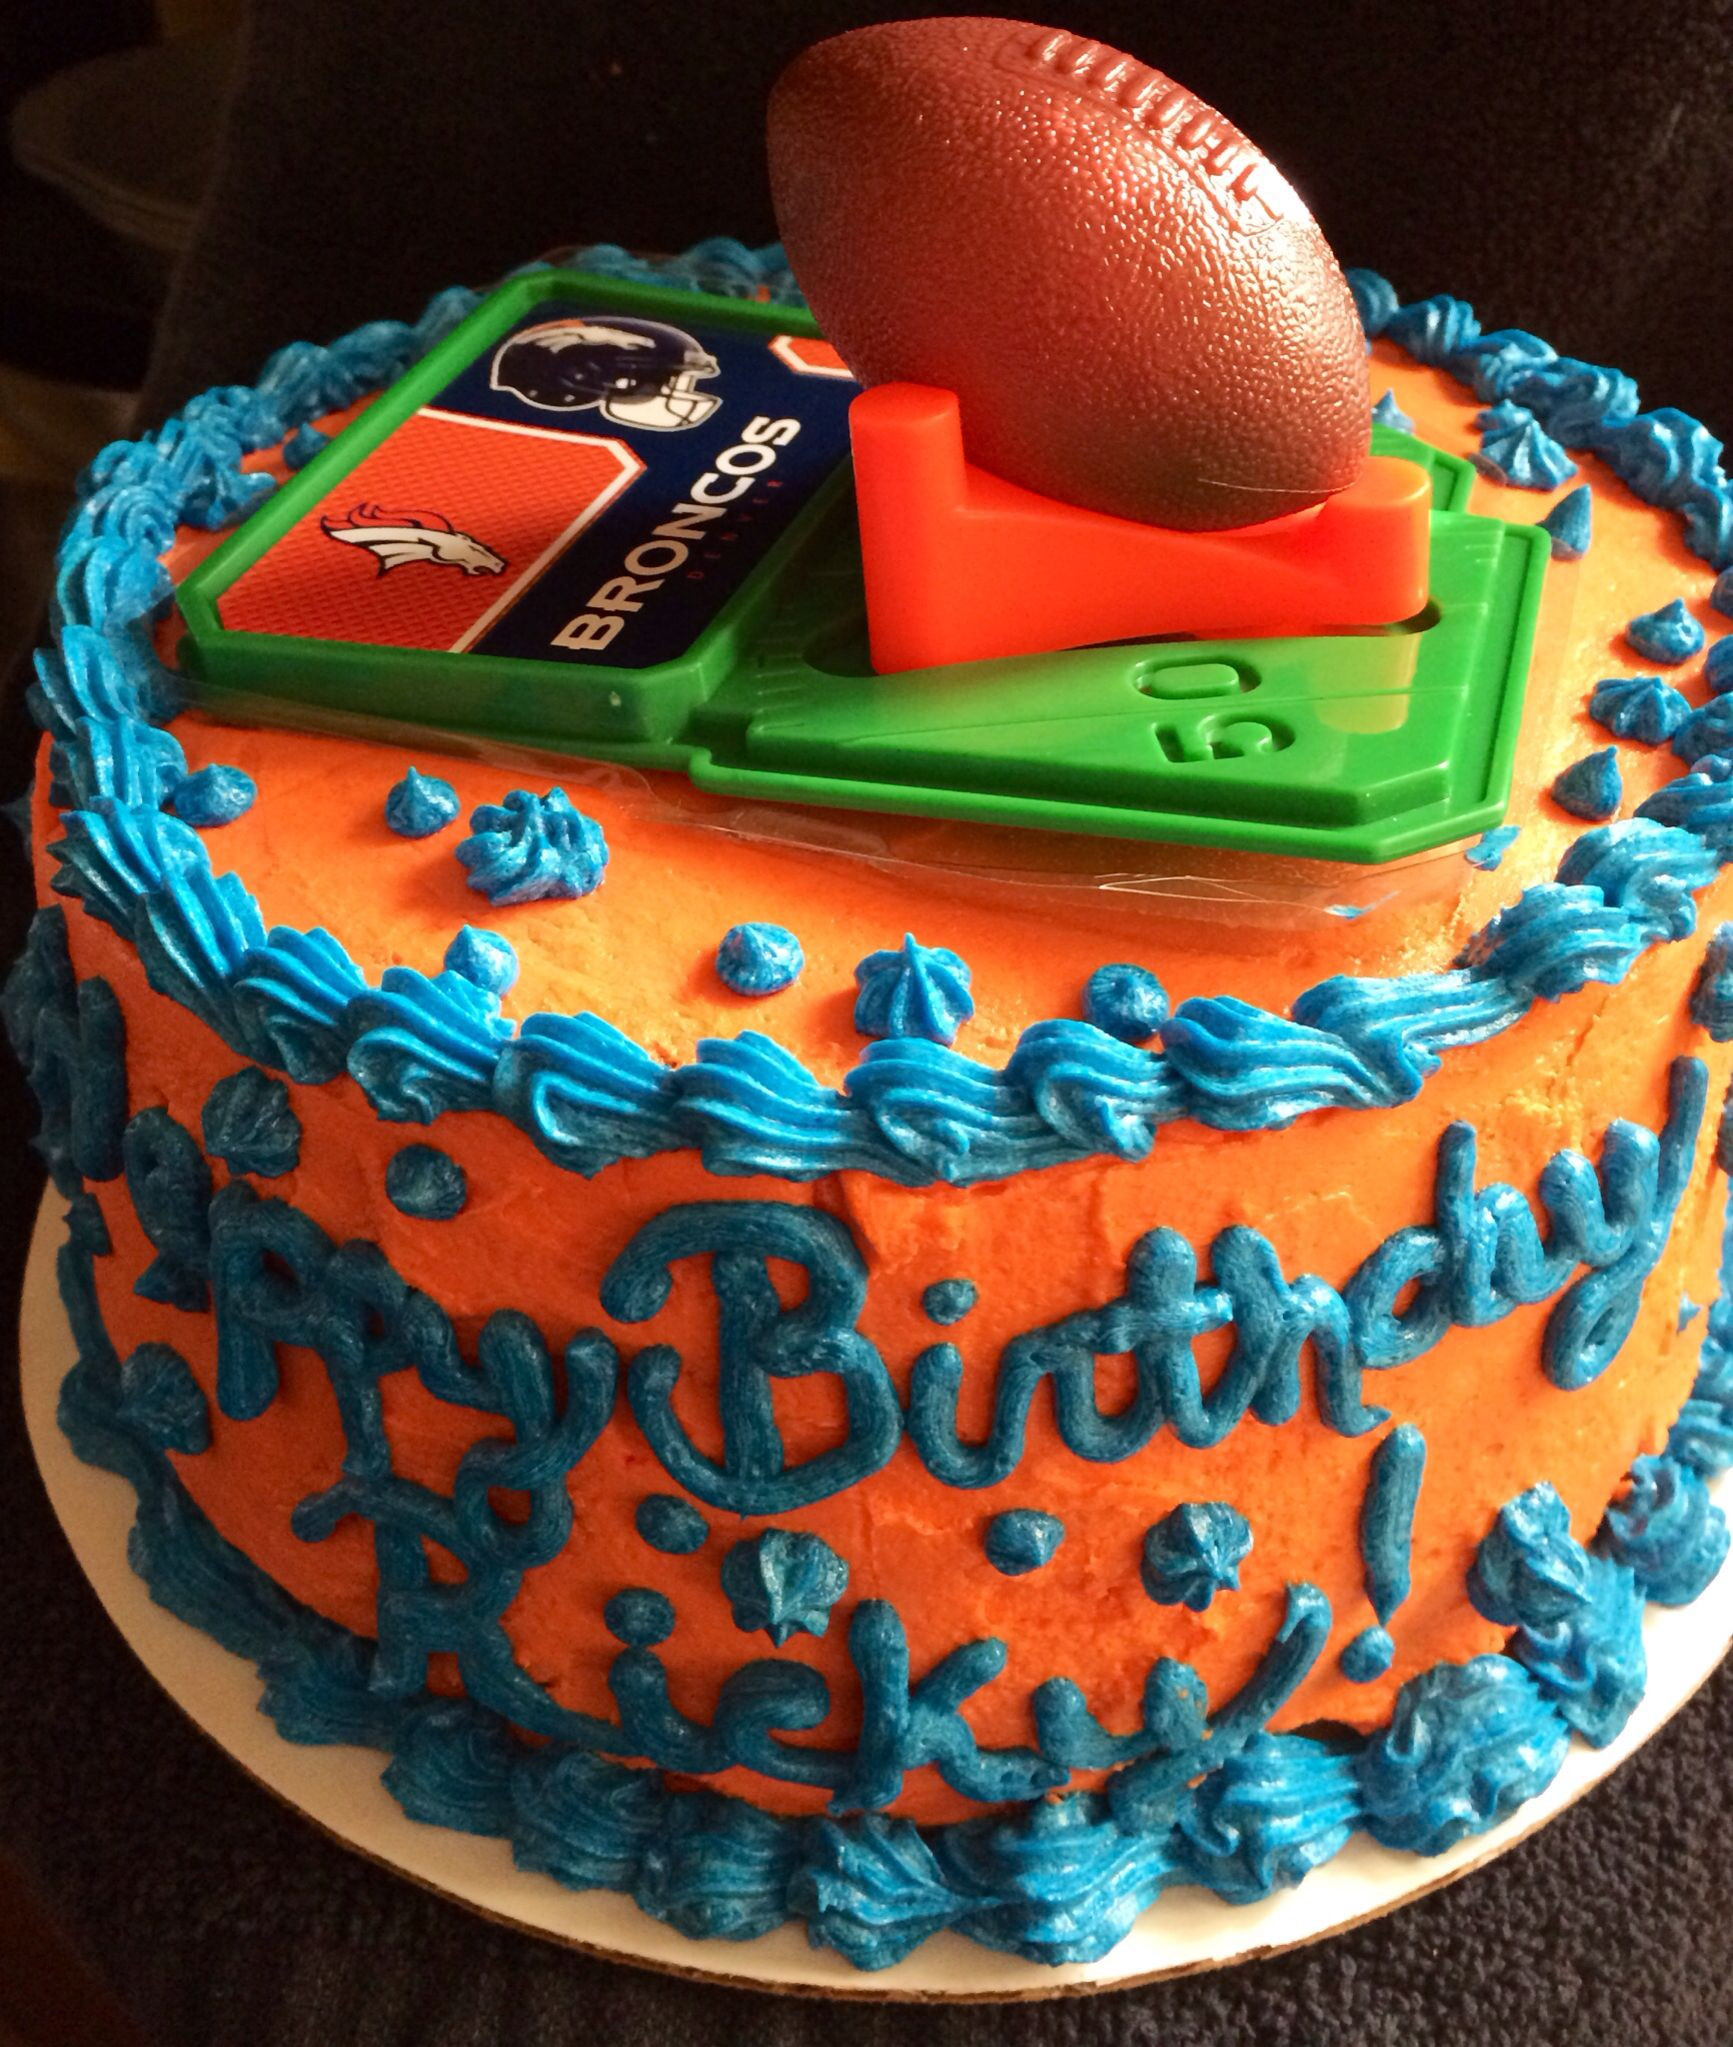 Denver Broncos Birthday Cake
 My Hubby s Denver Broncos Birthday Cake